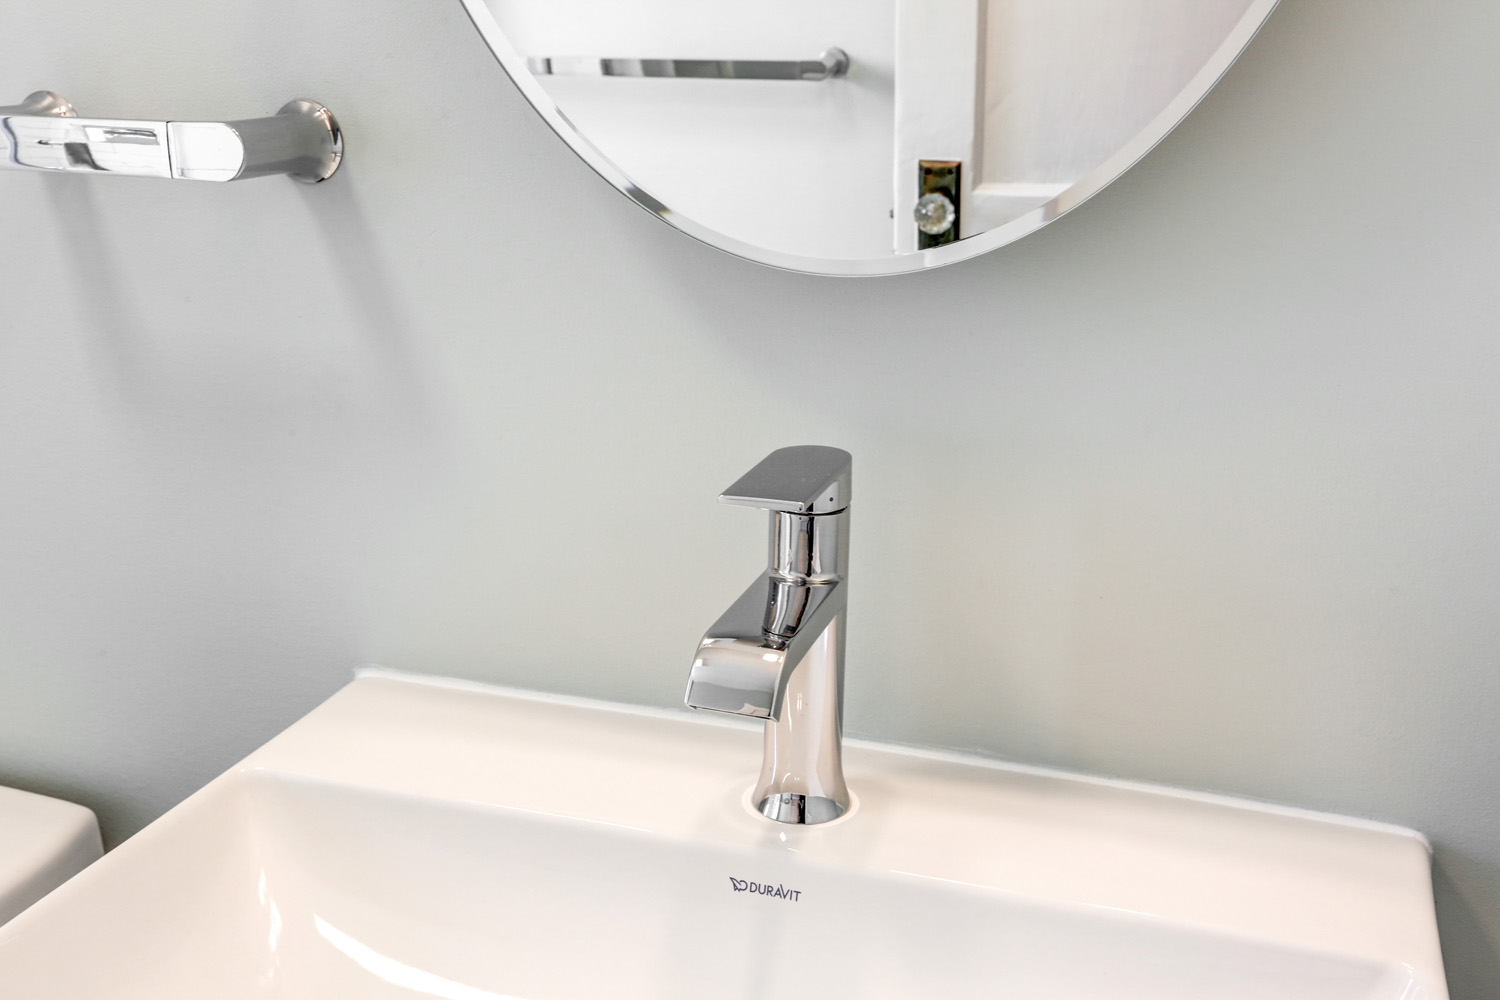 Chrome faucet in Lancaster City Bathroom Remodel